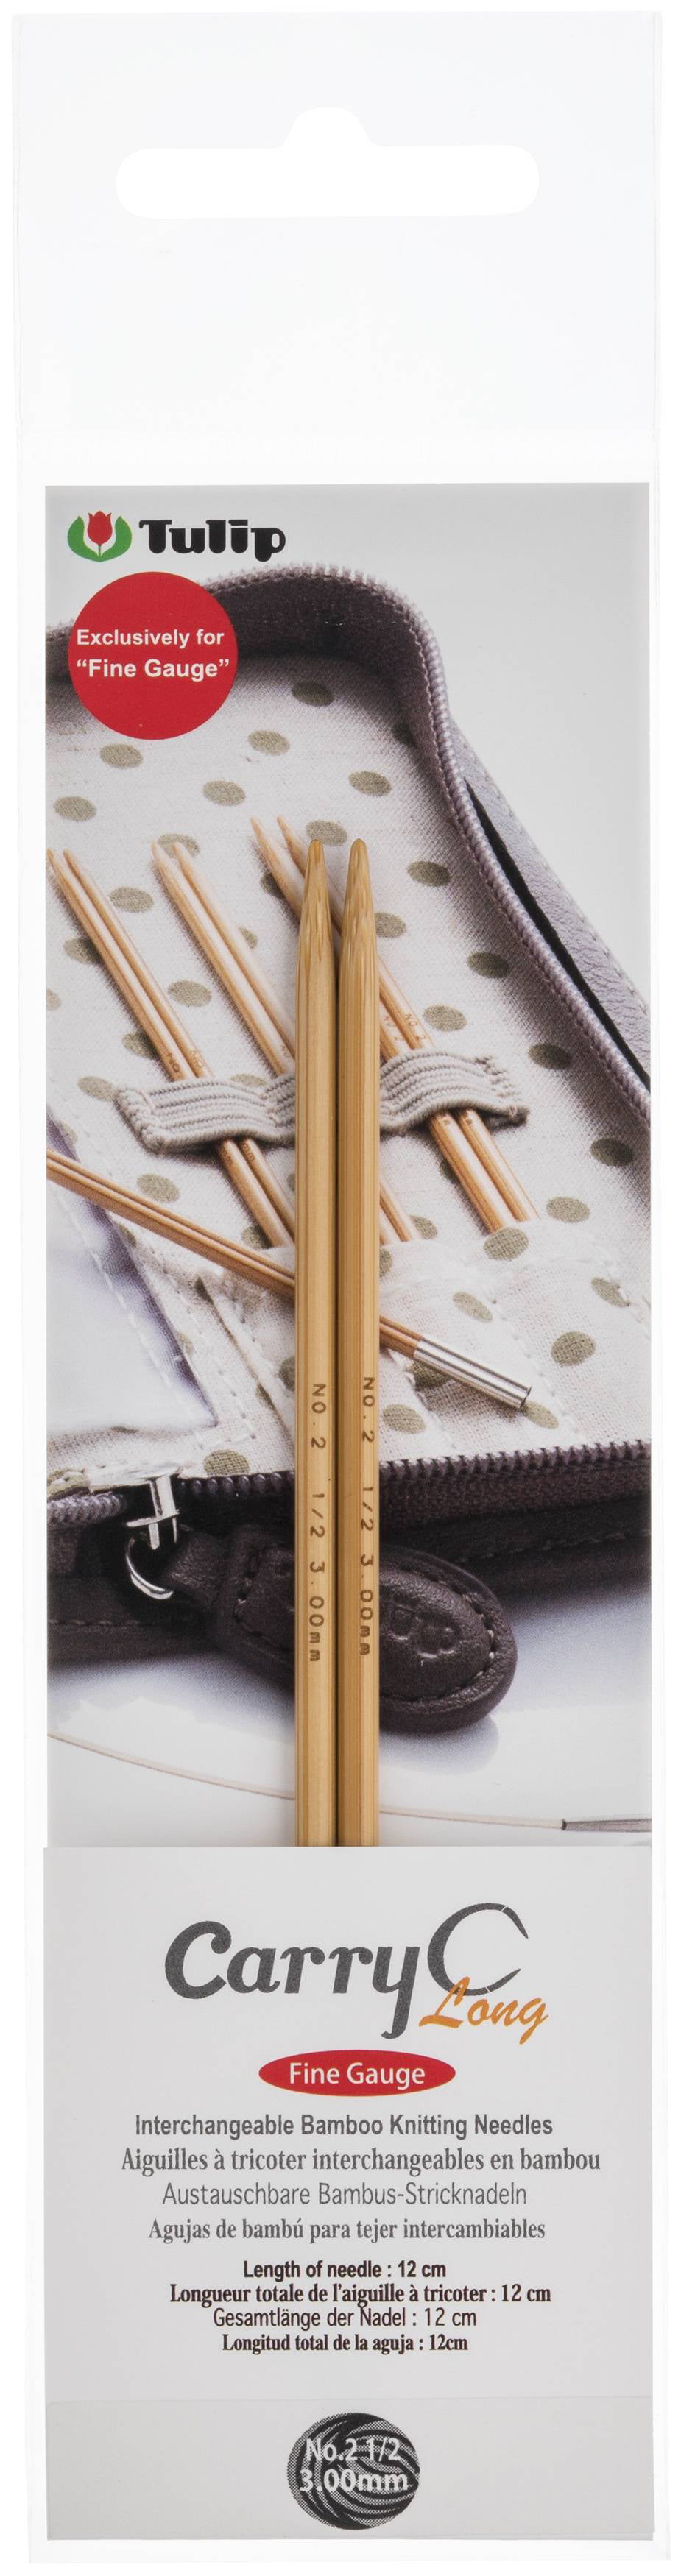 Tulip Carry C Intchg Bamboo Long Fine Gauge Knitting Needles-Size 2.5/3.00mm 